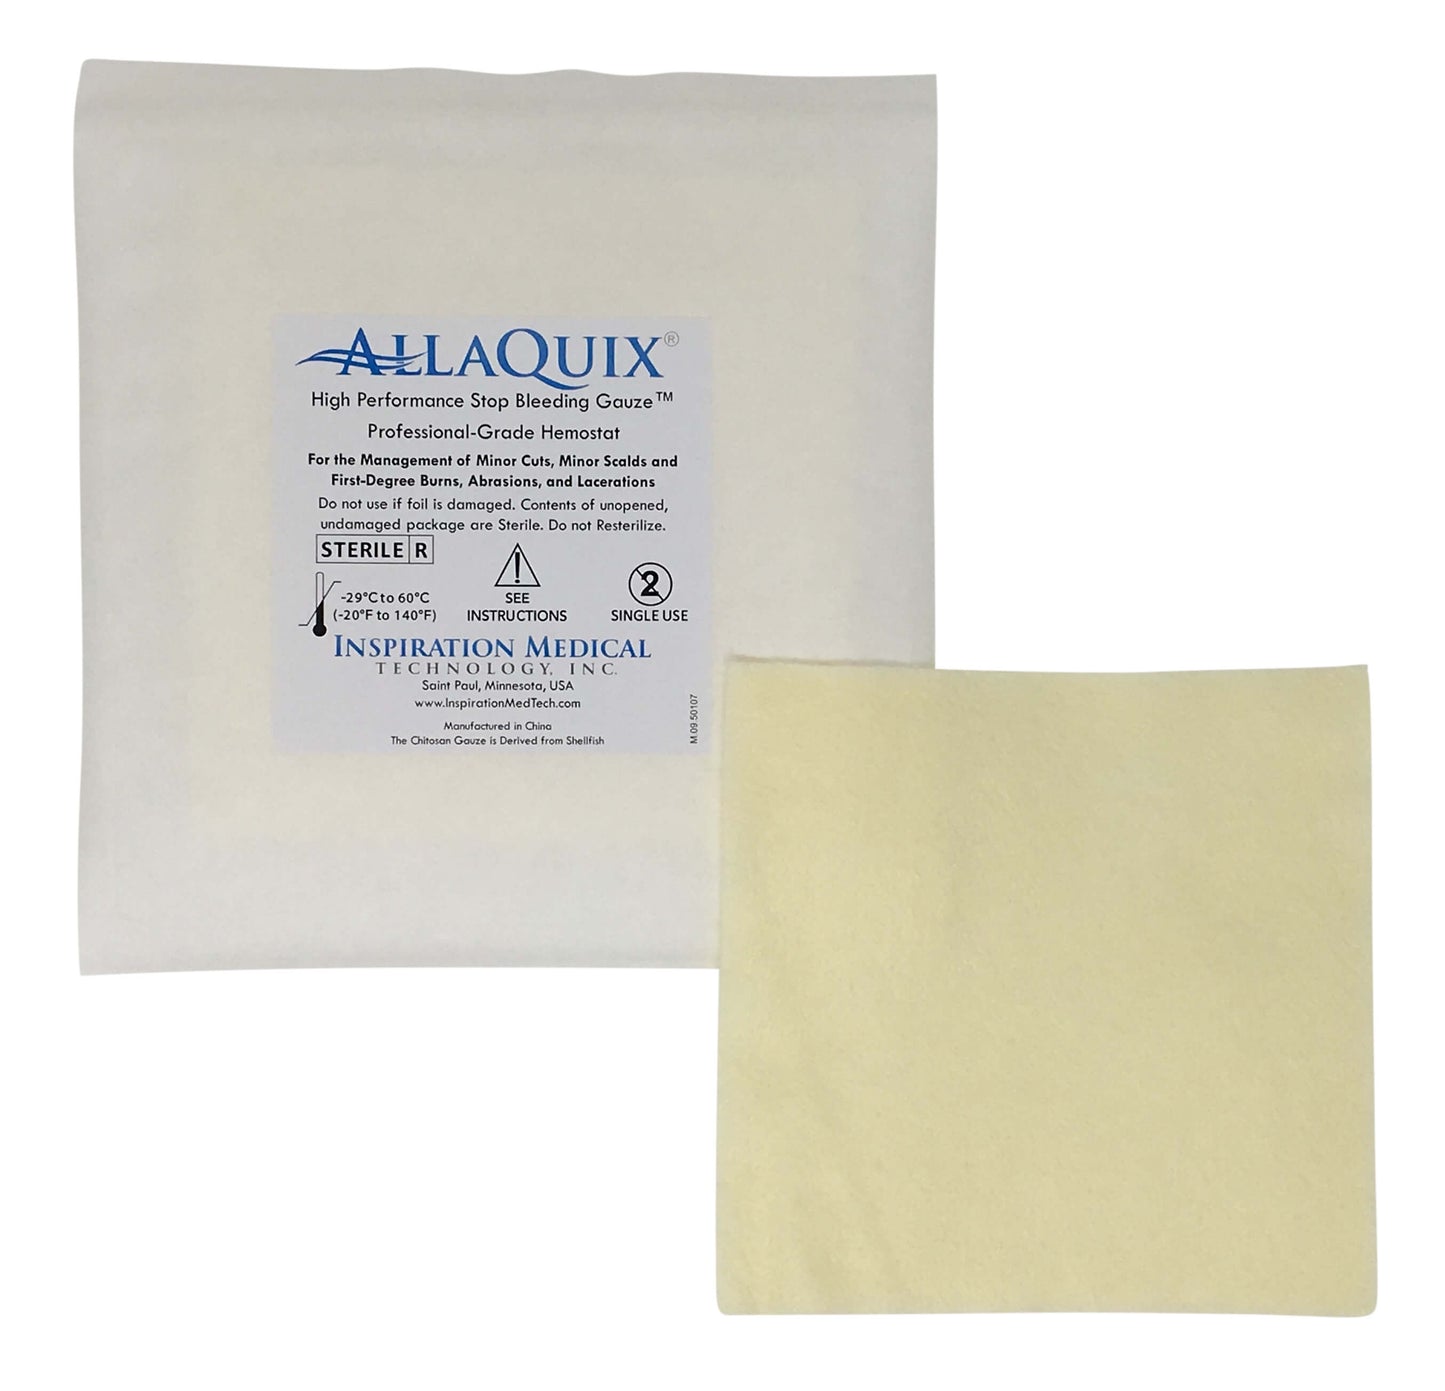 AllaQuix High Performance Stop Bleeding Gauze